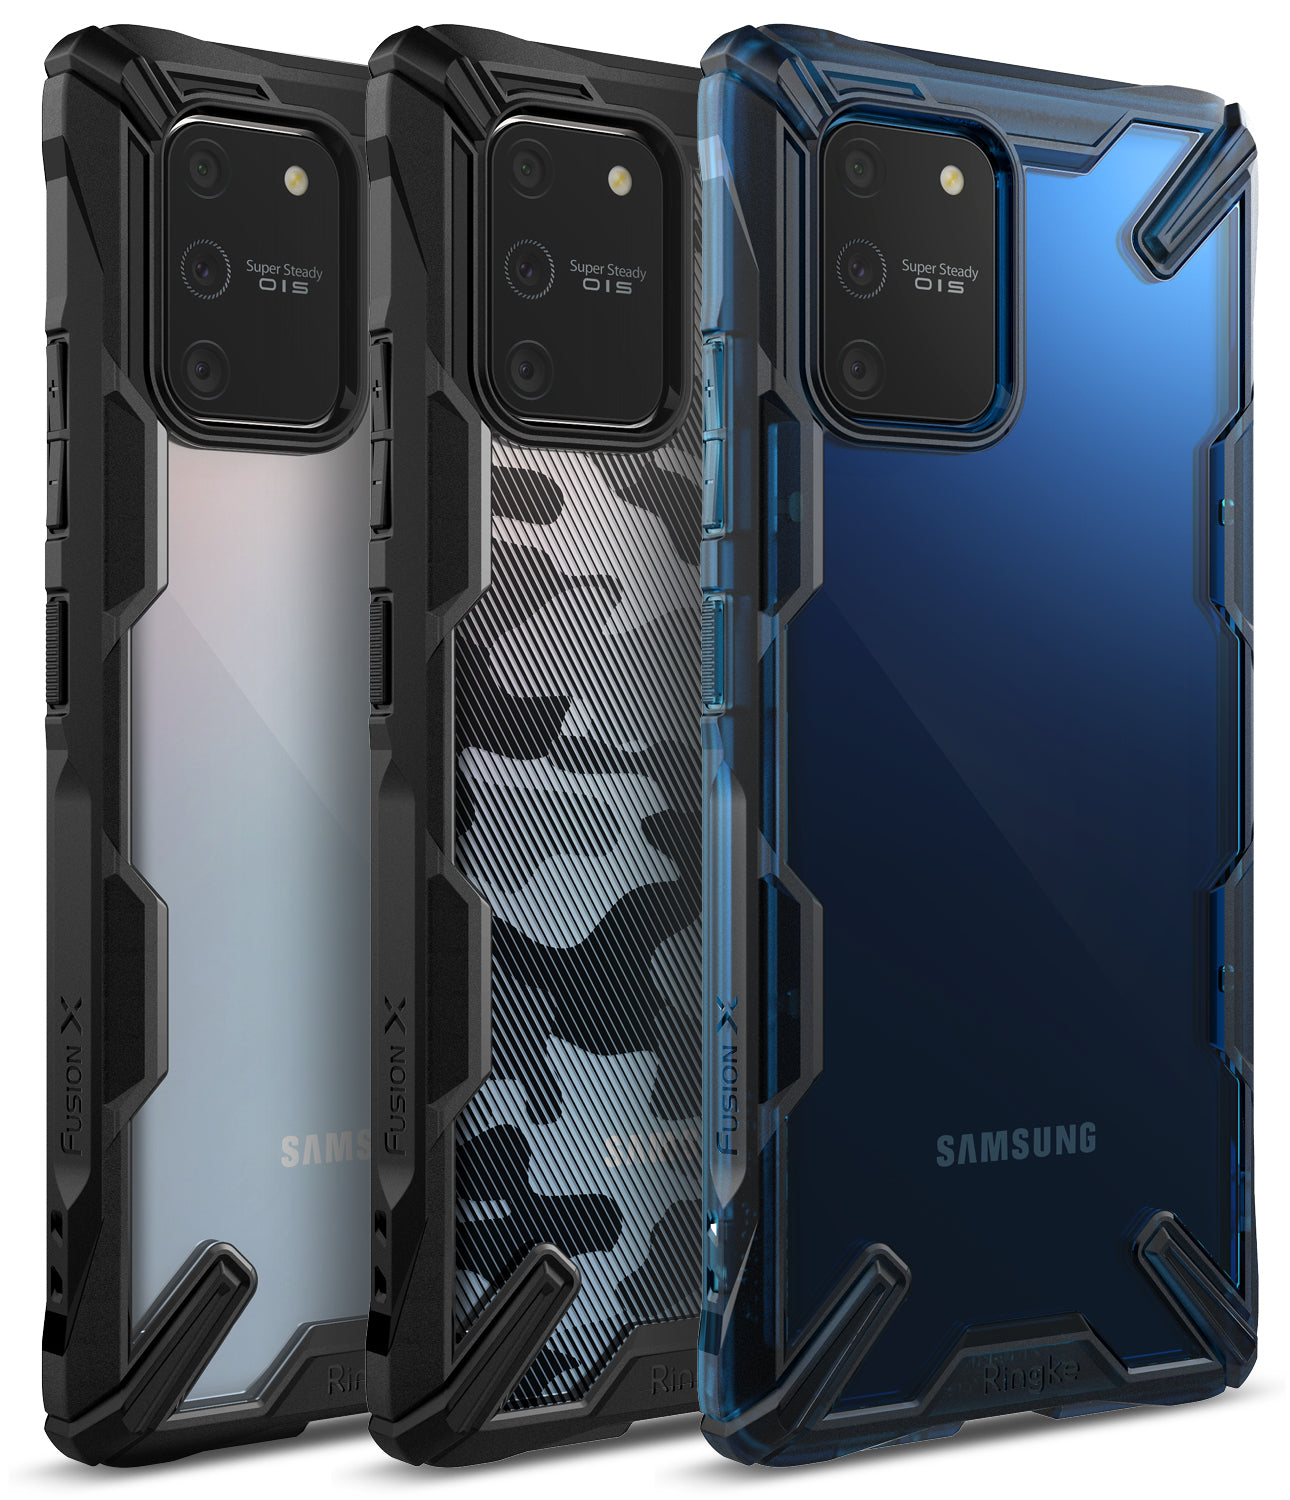 Ringke Fusion-X Case for Galaxy S10 Lite, Black, Camo Black, Space Blue